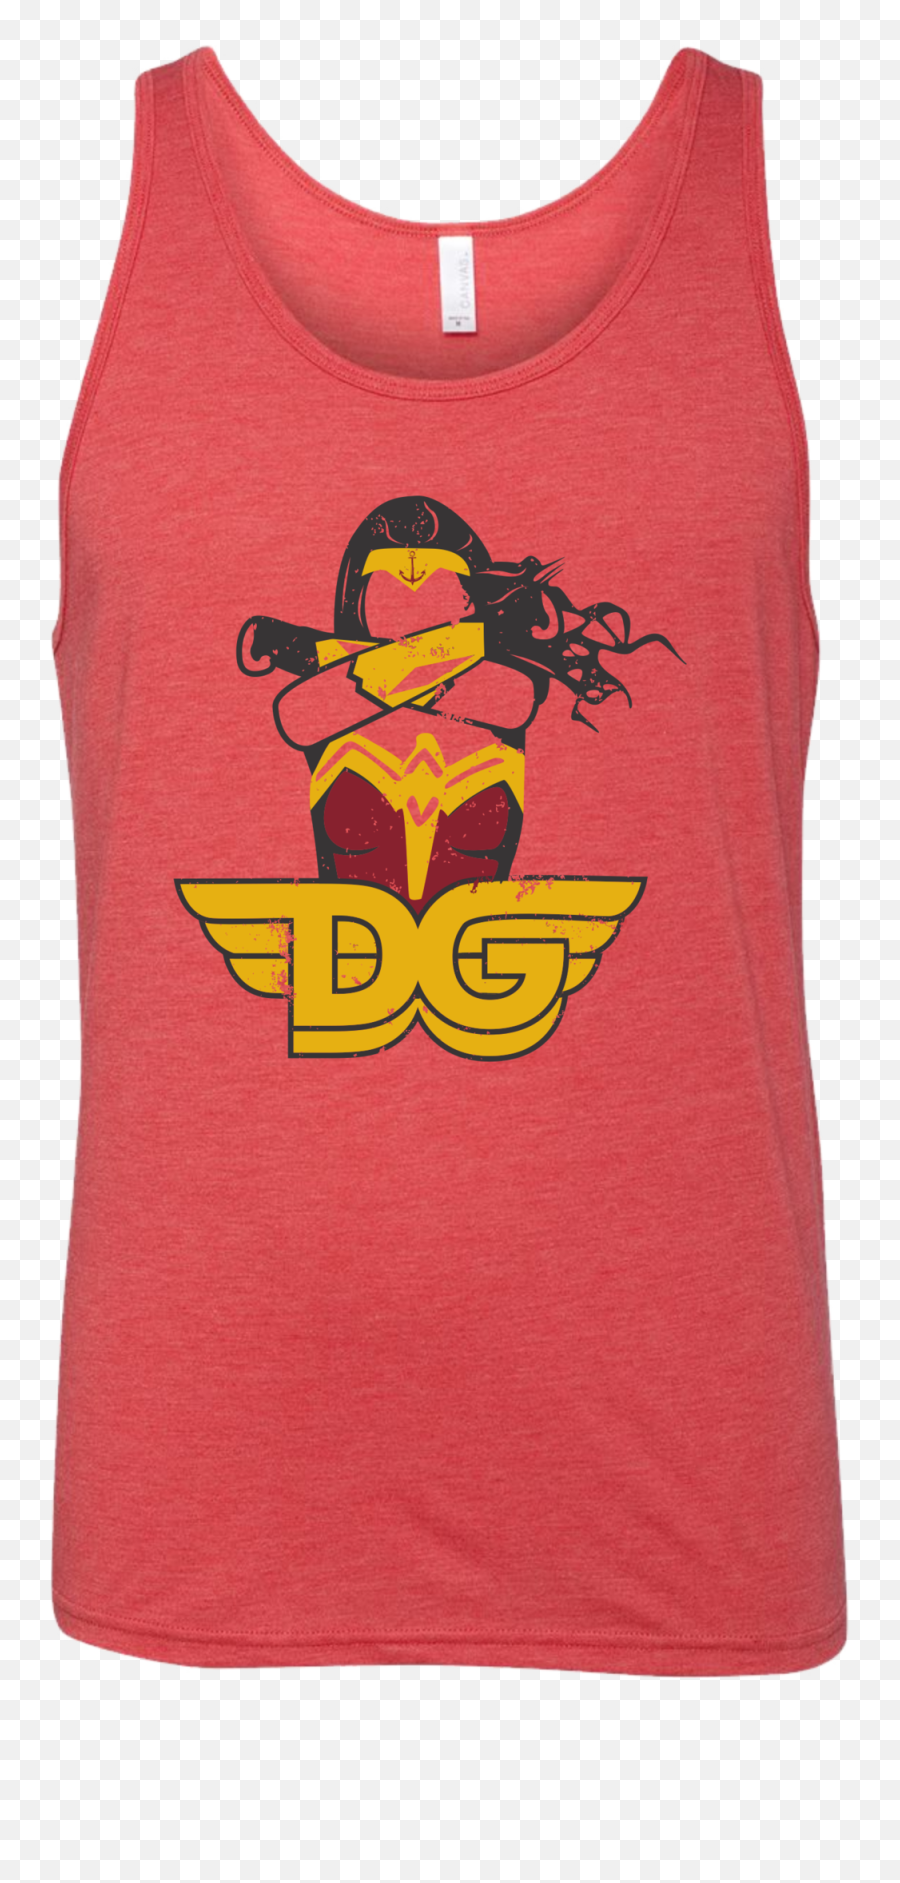 Design - Dg Wonder Woman U2014 Ib Collegiate Wonder Woman Png,Wonderwoman Png